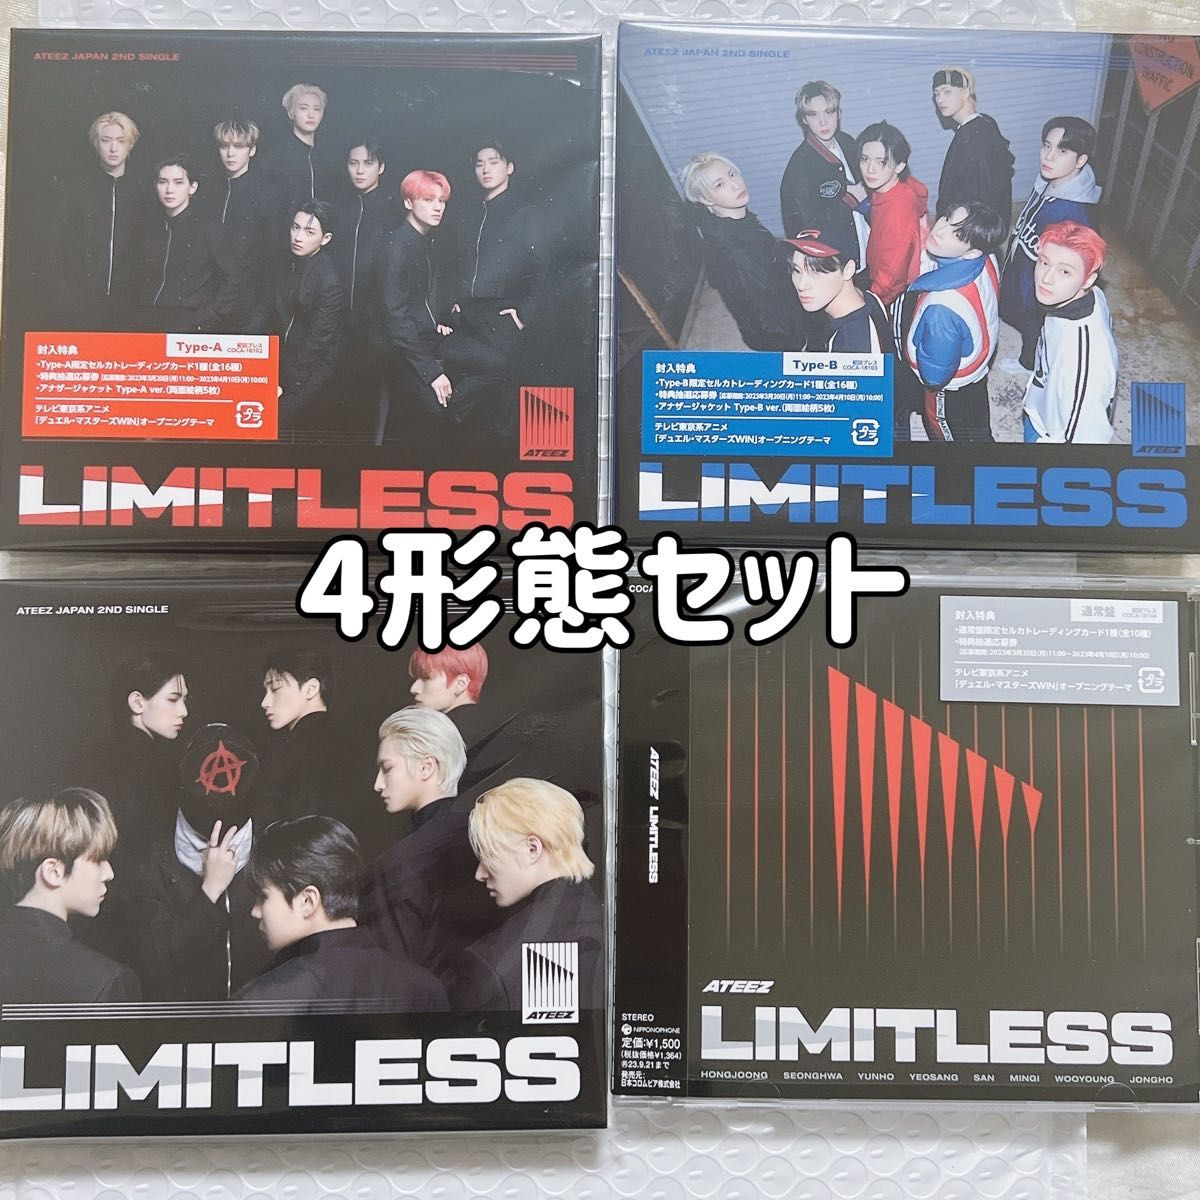 ATEEZ JAPAN 2ND SINGLE「Limitless」4形態セット-